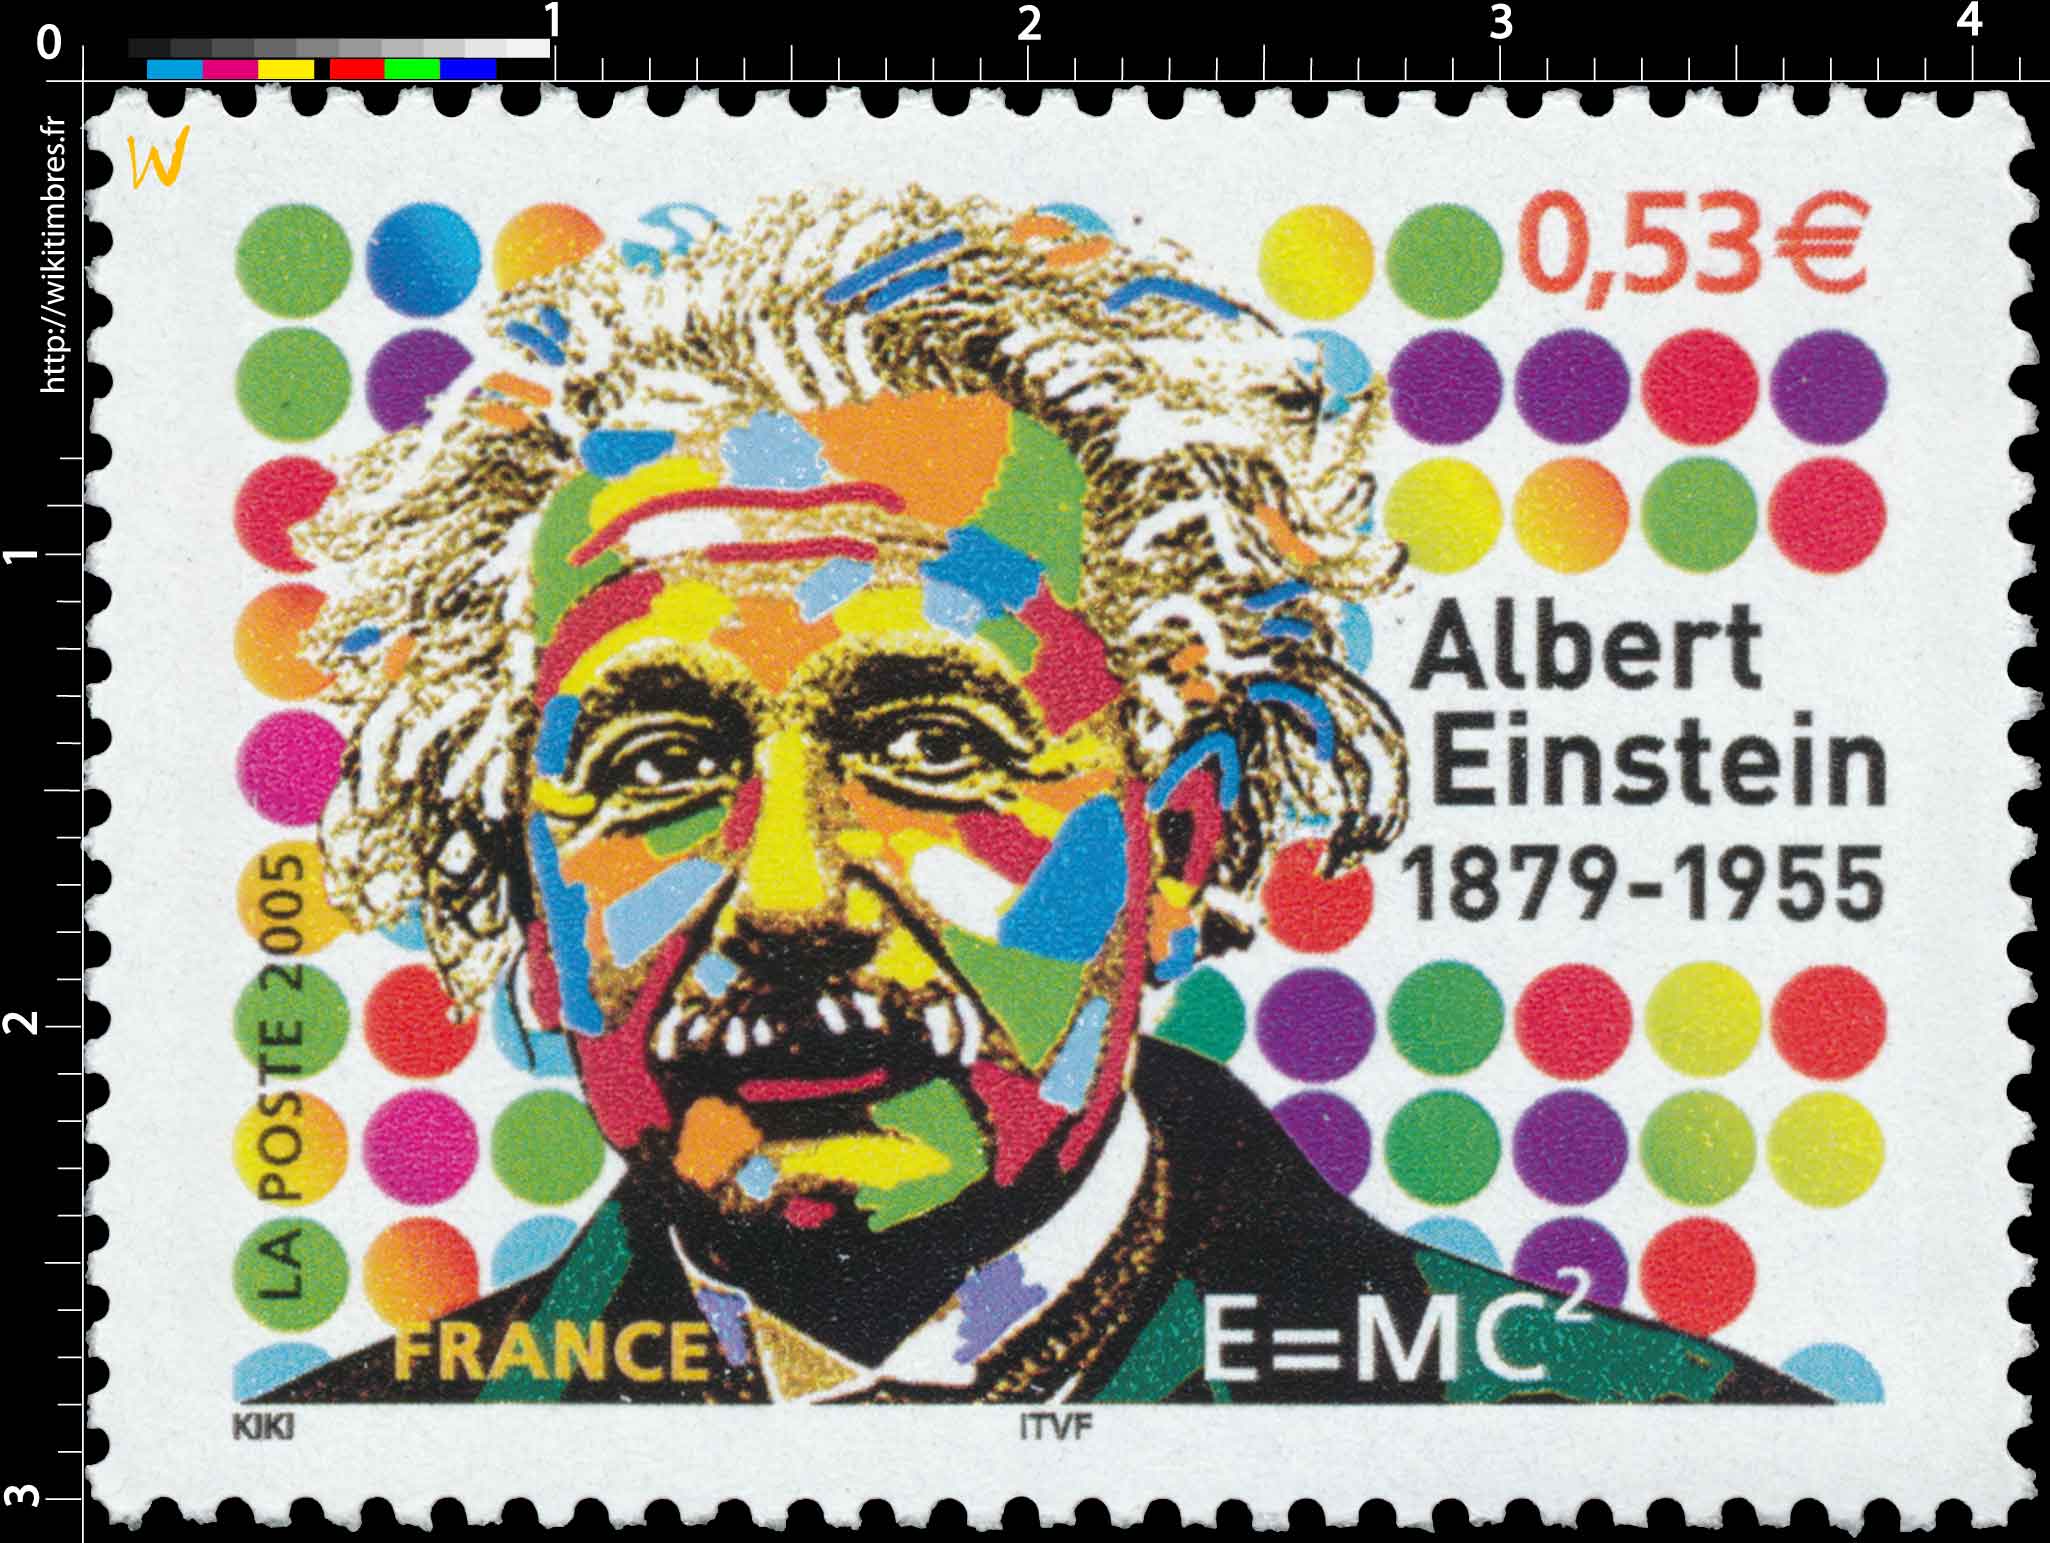 2005 Albert Einstein 1879-1955 E=MC2